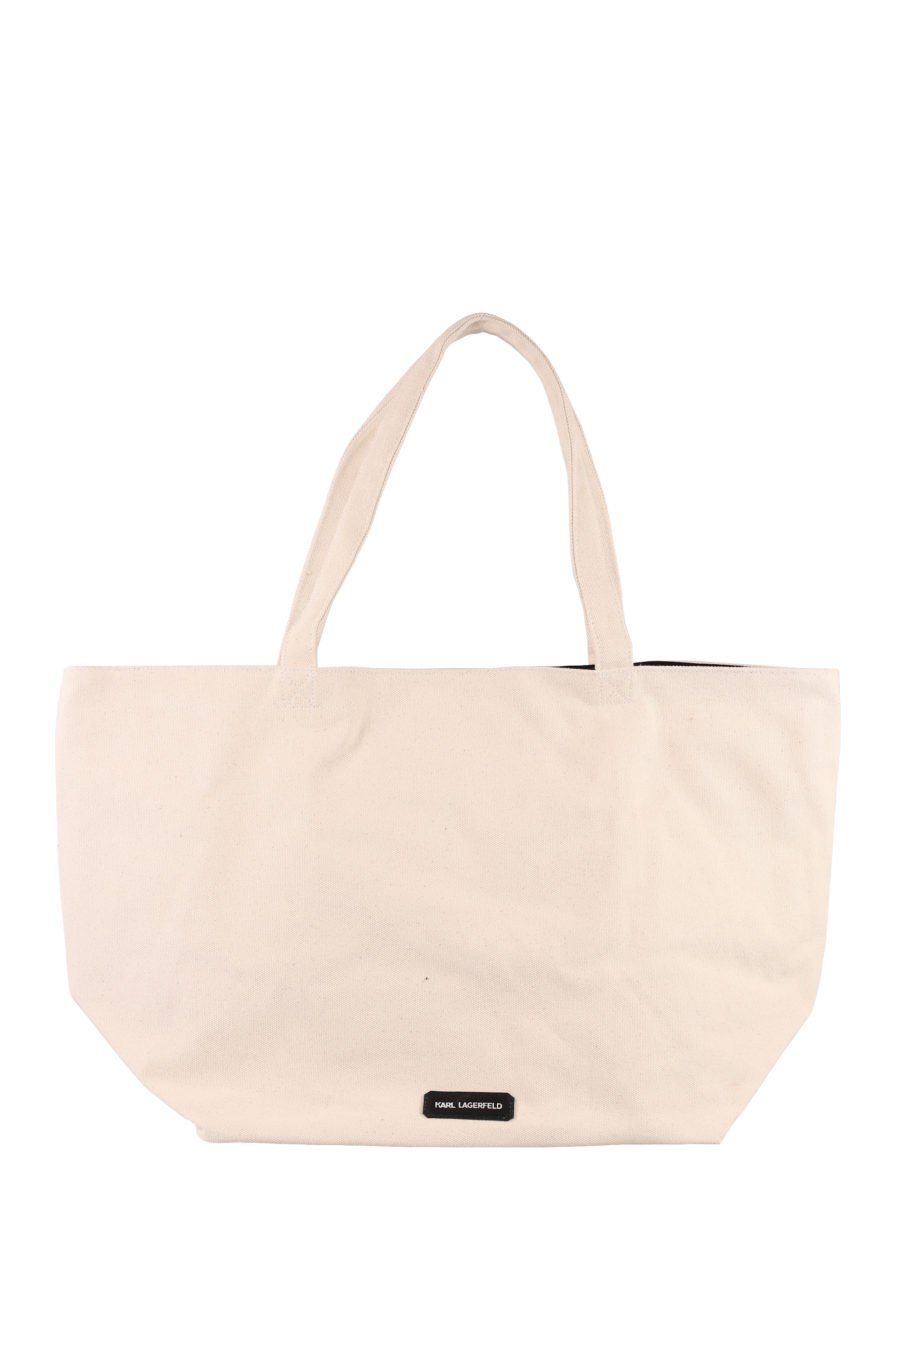 Natural bag "Tote Ikonik" with silhouettes - IMG 0993